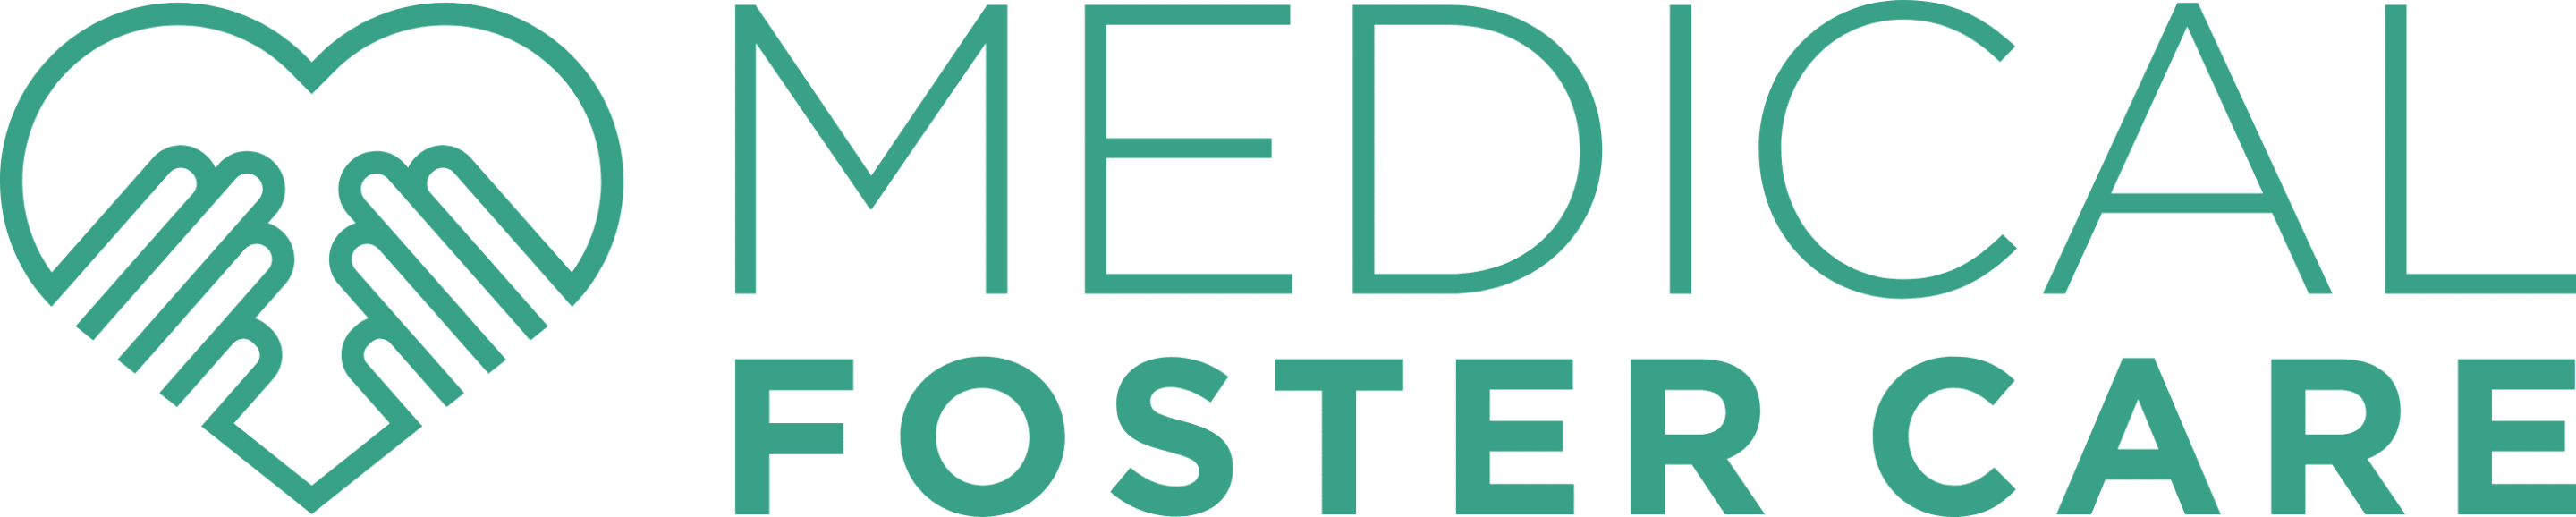 Medical Foster Care Logo